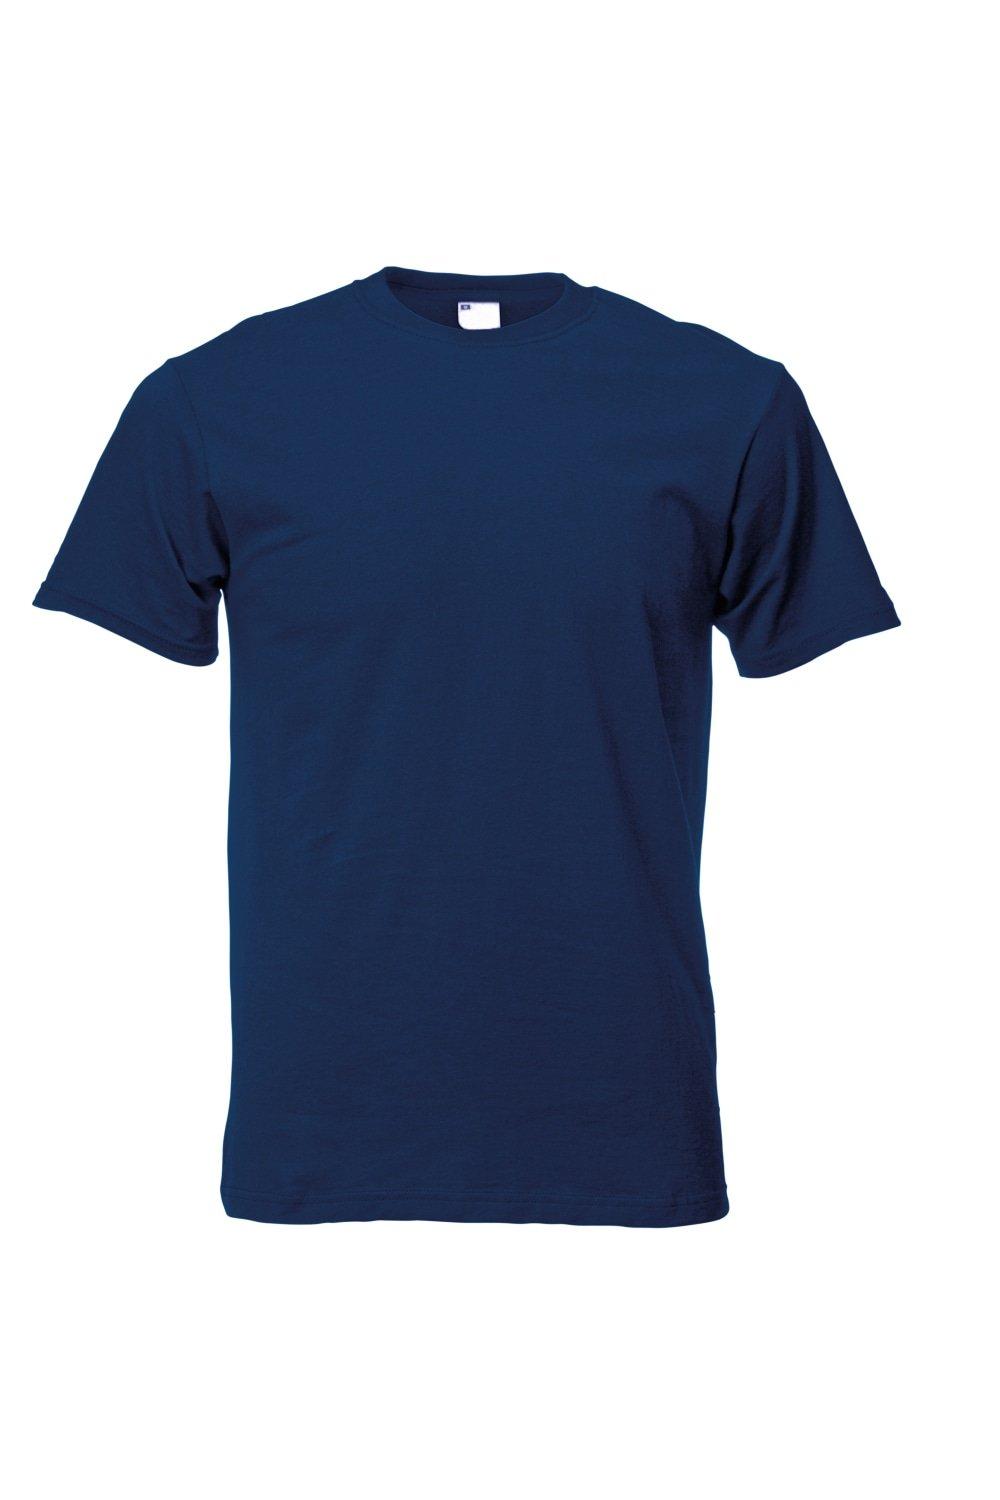 Повседневная футболка с коротким рукавом Universal Textiles, темно-синий повседневная футболка с коротким рукавом universal textiles синий